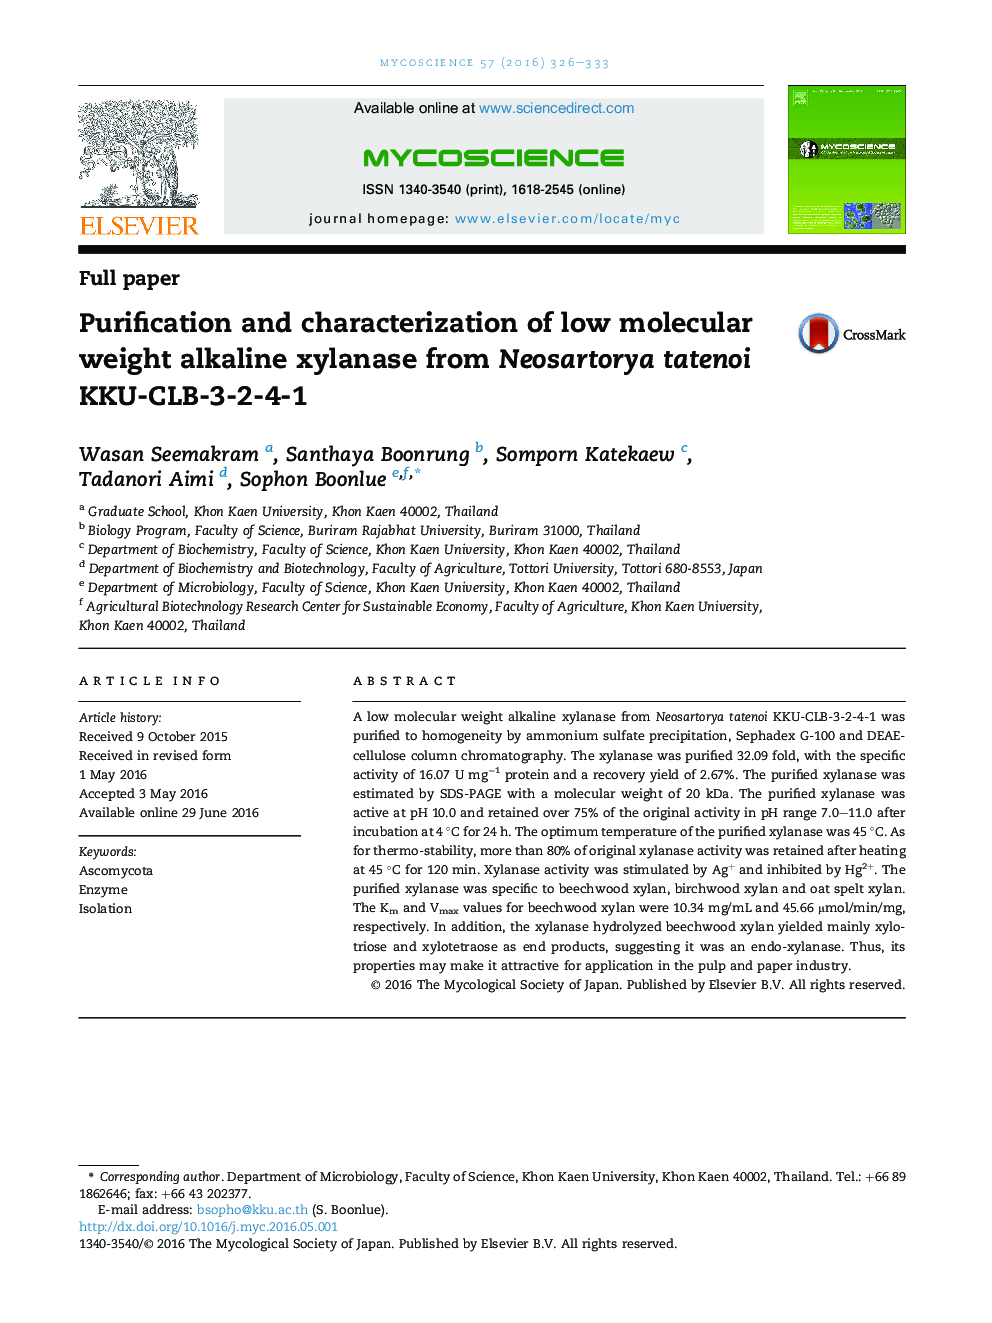 Purification and characterization of low molecular weight alkaline xylanase from Neosartorya tatenoi KKU-CLB-3-2-4-1